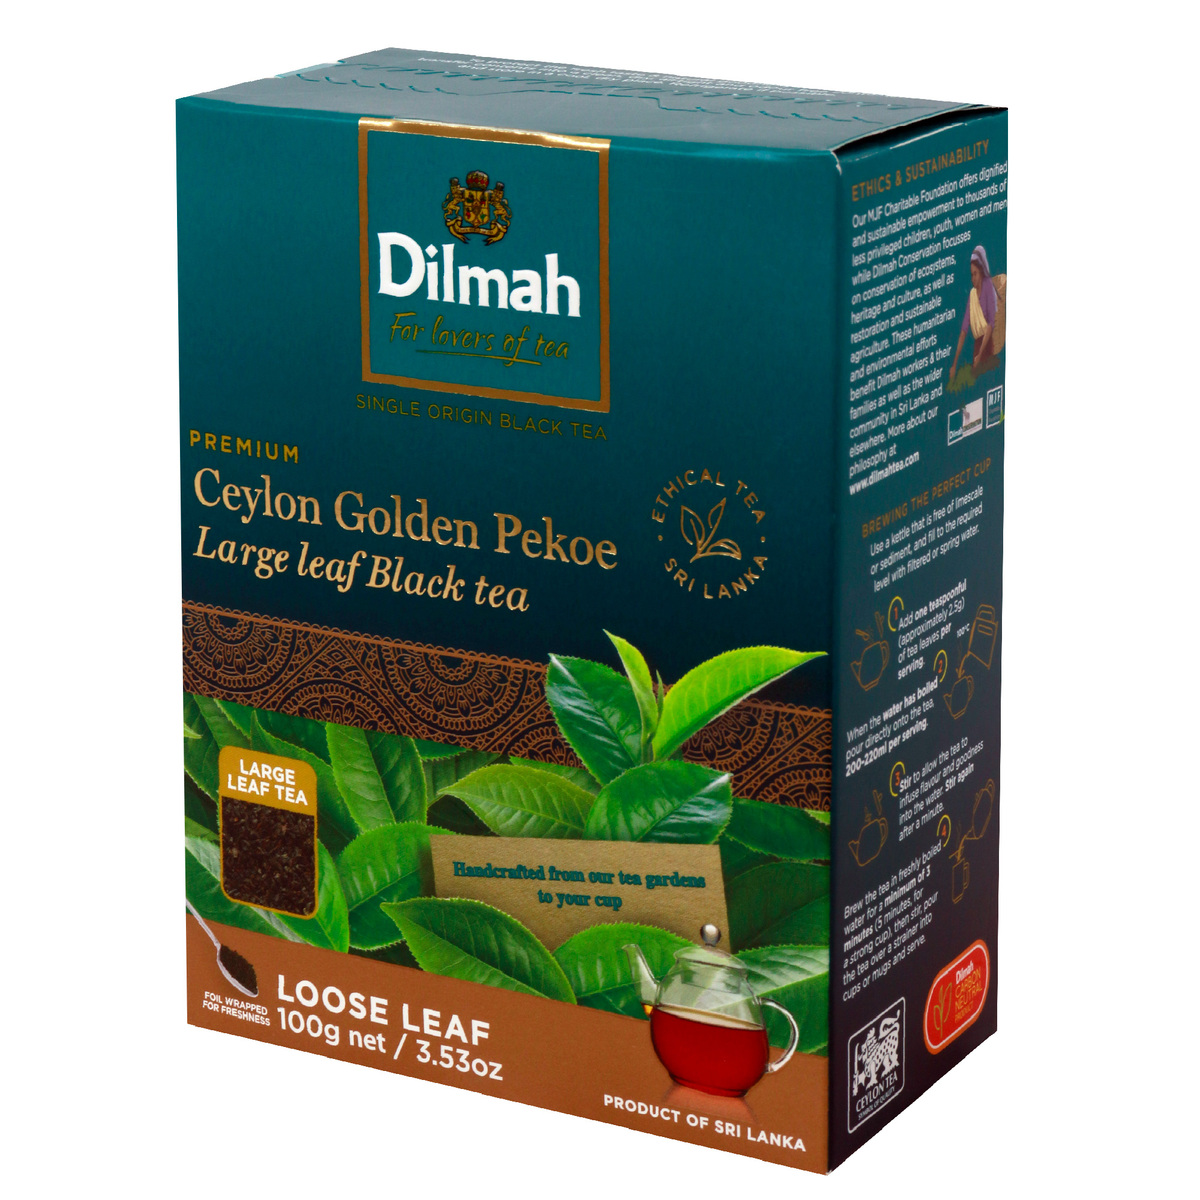 Dilmah Premium Ceylon Golden Pekoe Large Leaf Black Tea 100g